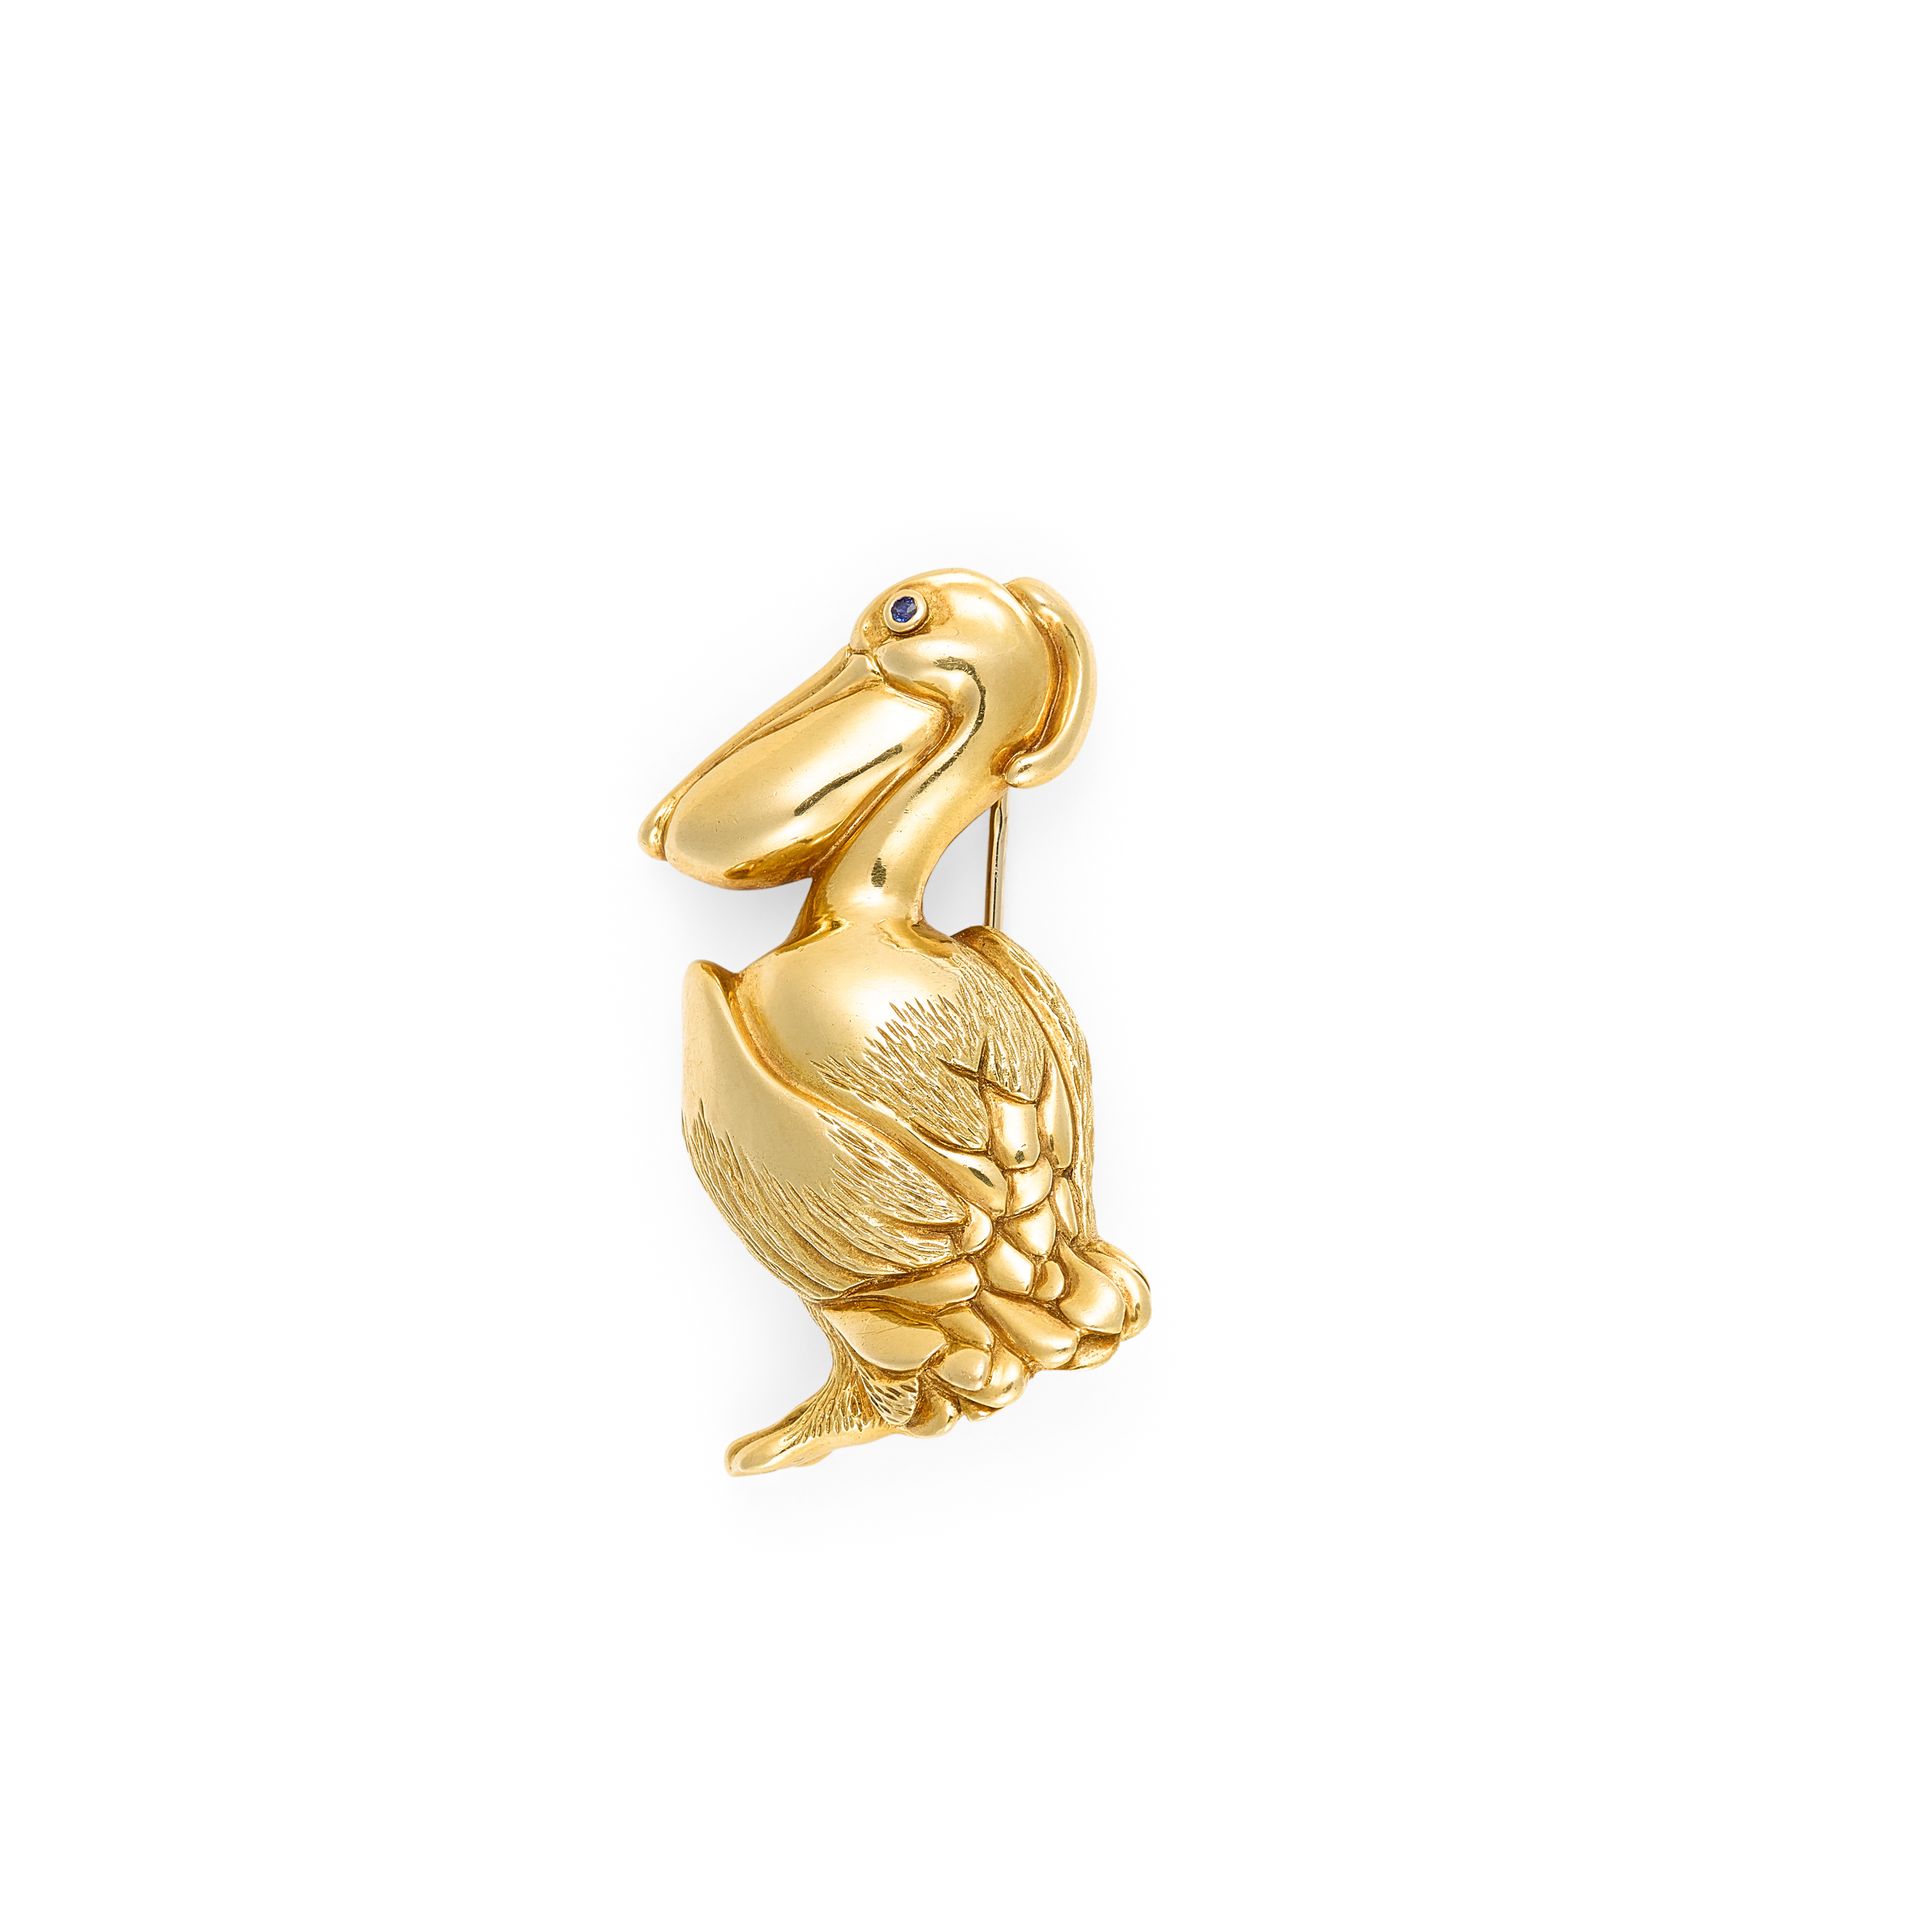 BROCHE HERMÈS 18K黄金材质 
以一只鹈鹕为主题 
眼睛里镶嵌着一颗小蓝宝石
双针系统
标有鹰头的标志 
镌刻的巴黎爱马仕签名 
尺寸：5 x 2&hellip;